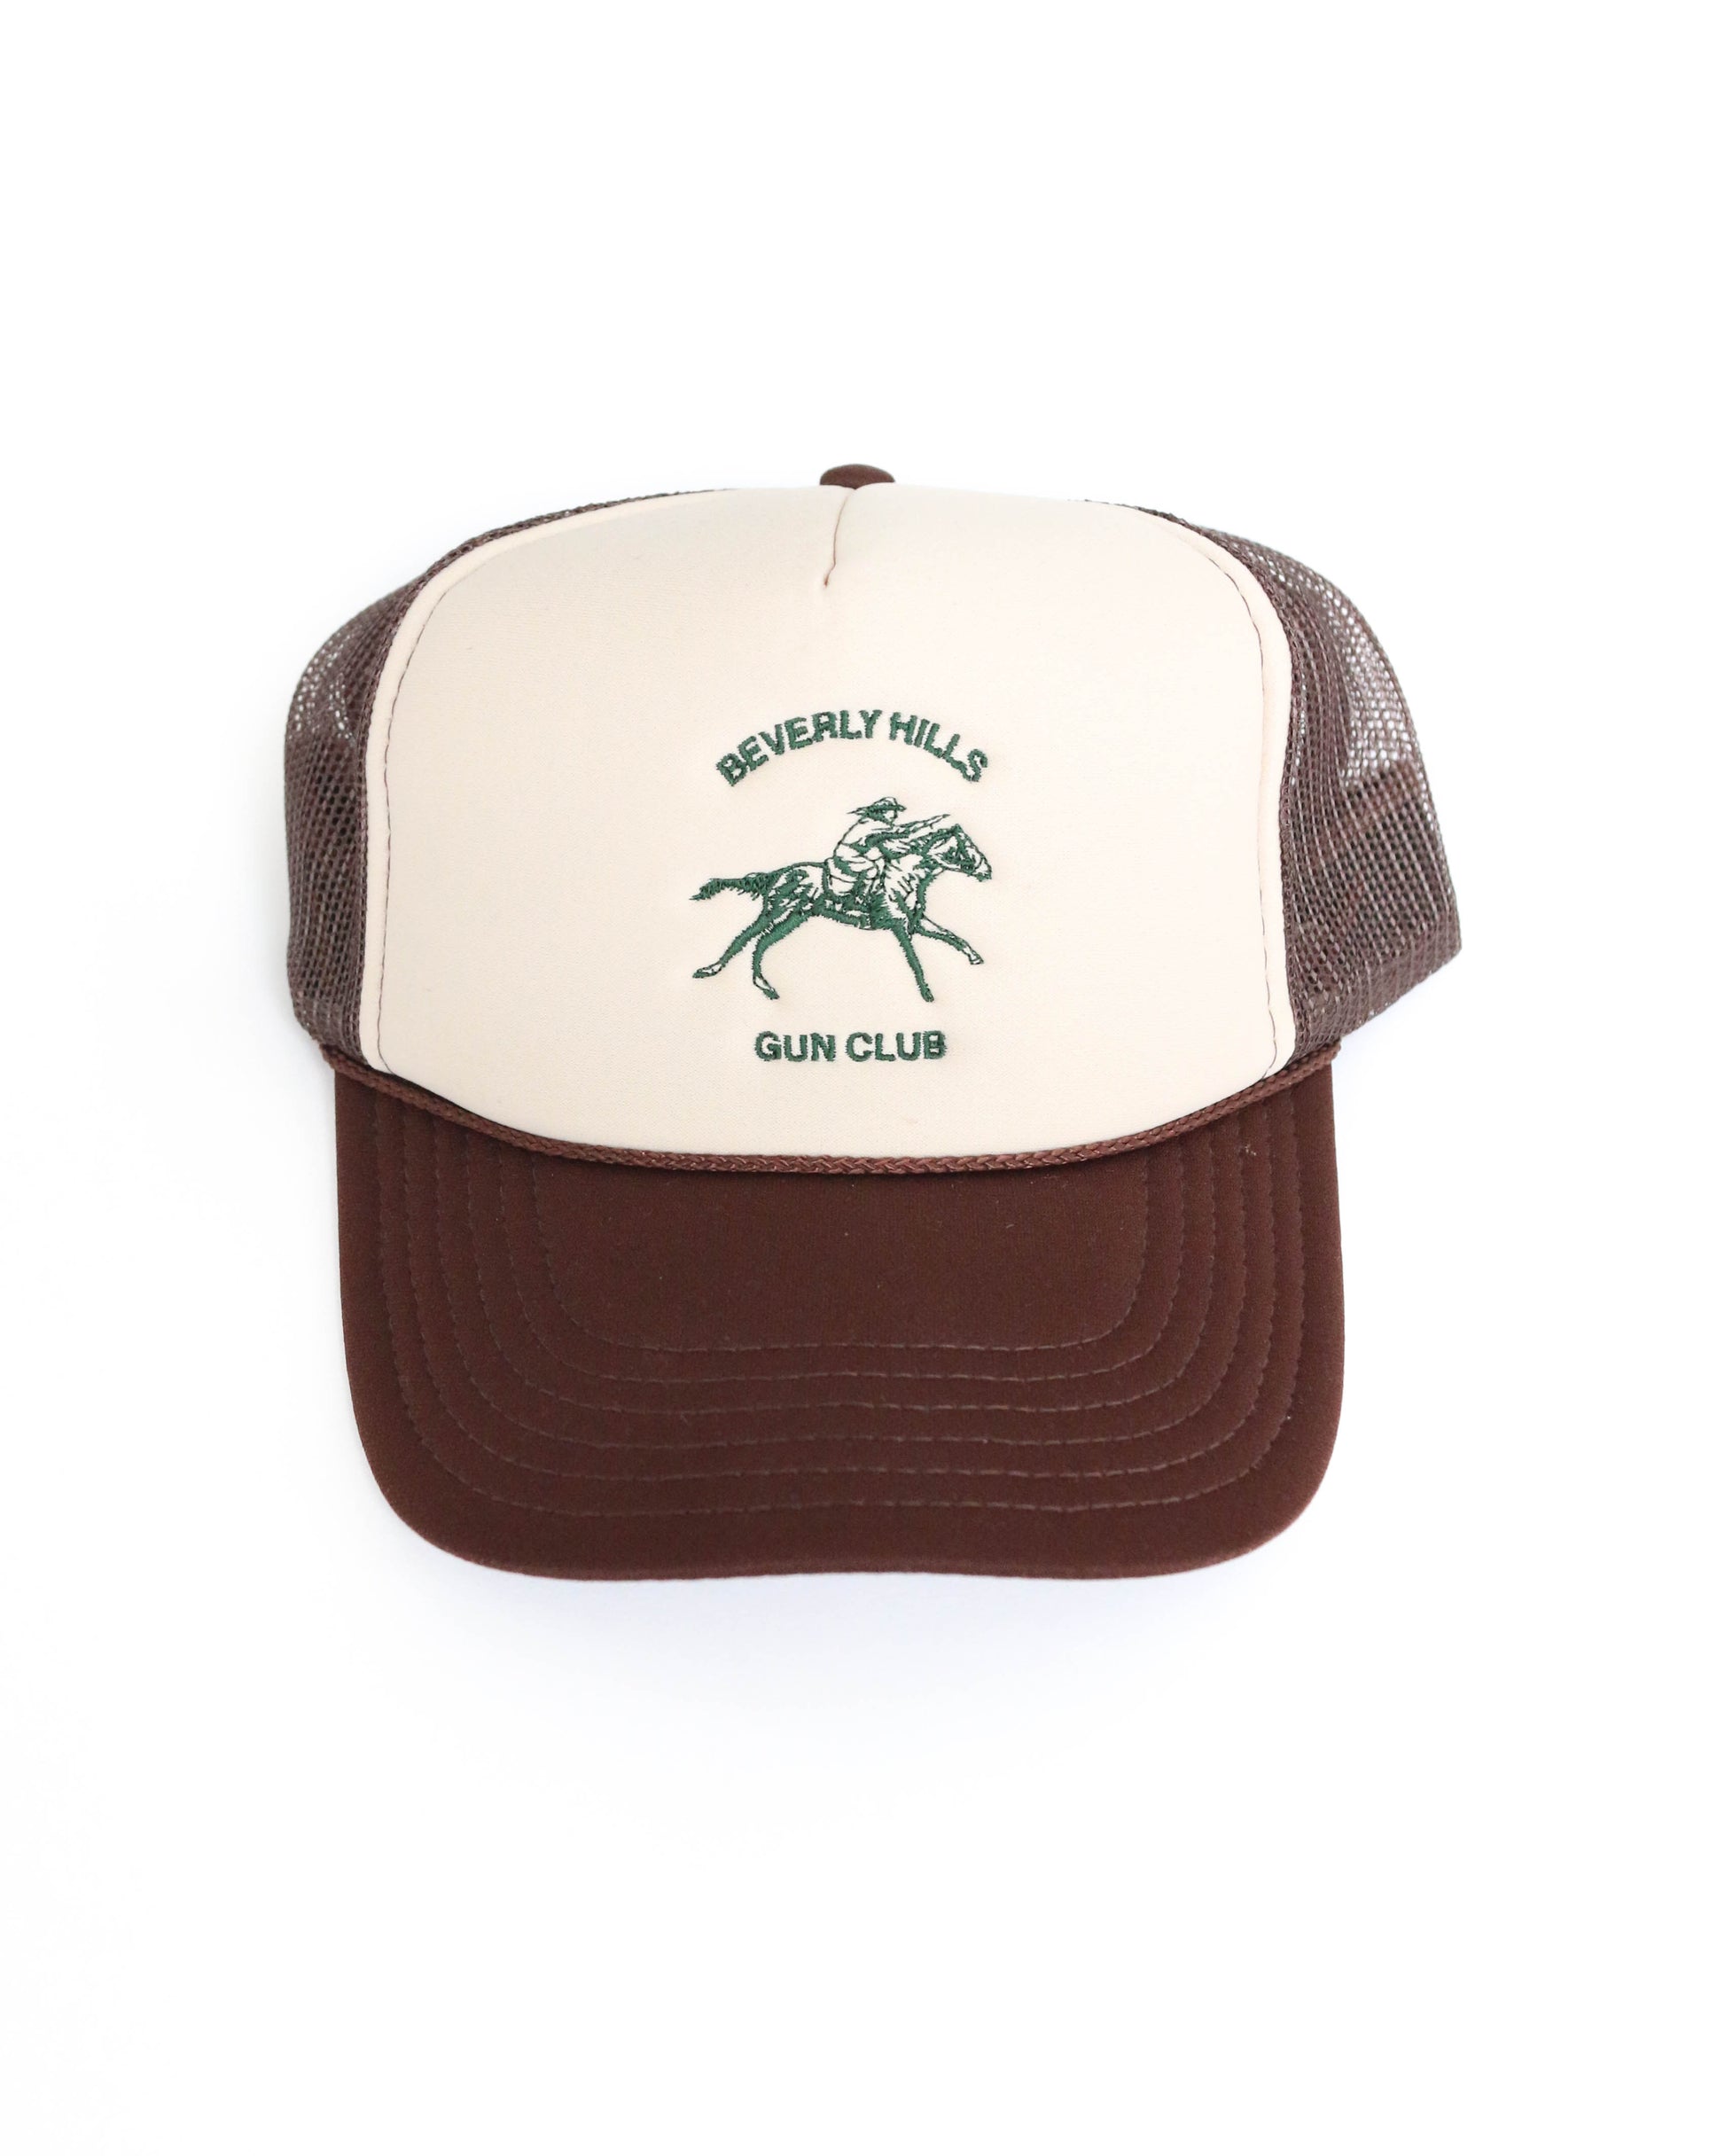 COWBOY TRUCKER HAT - BROWN/TAN - beverlyhillsgc.com